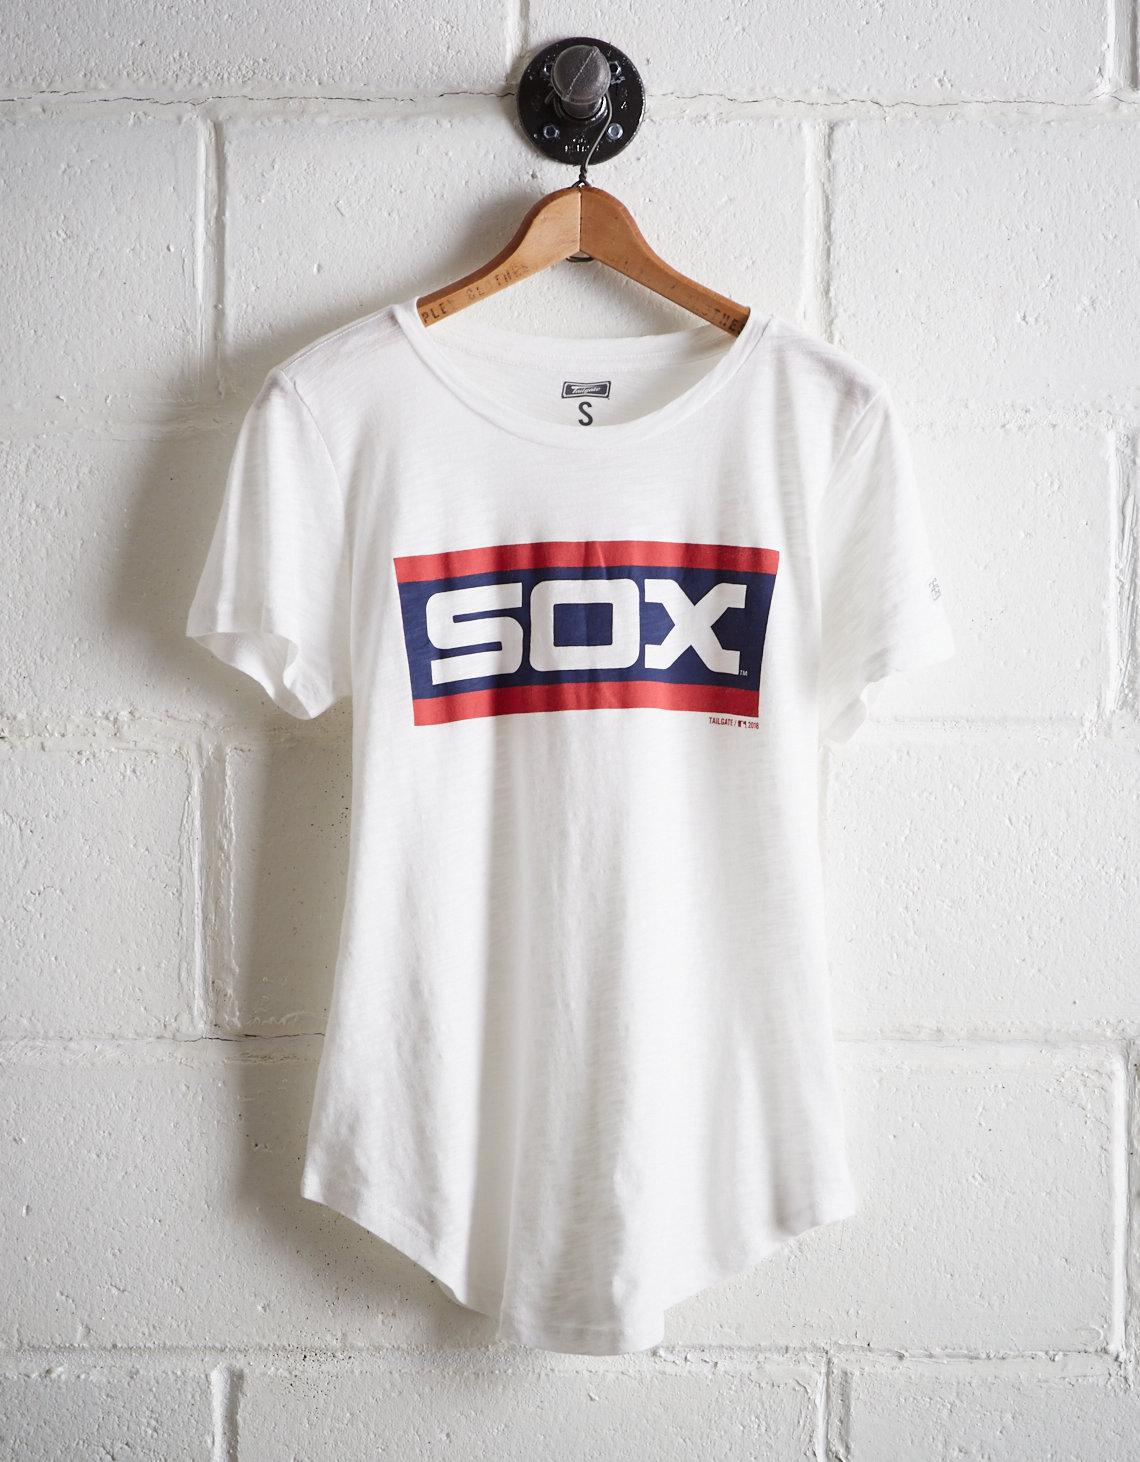 white sox vintage shirt